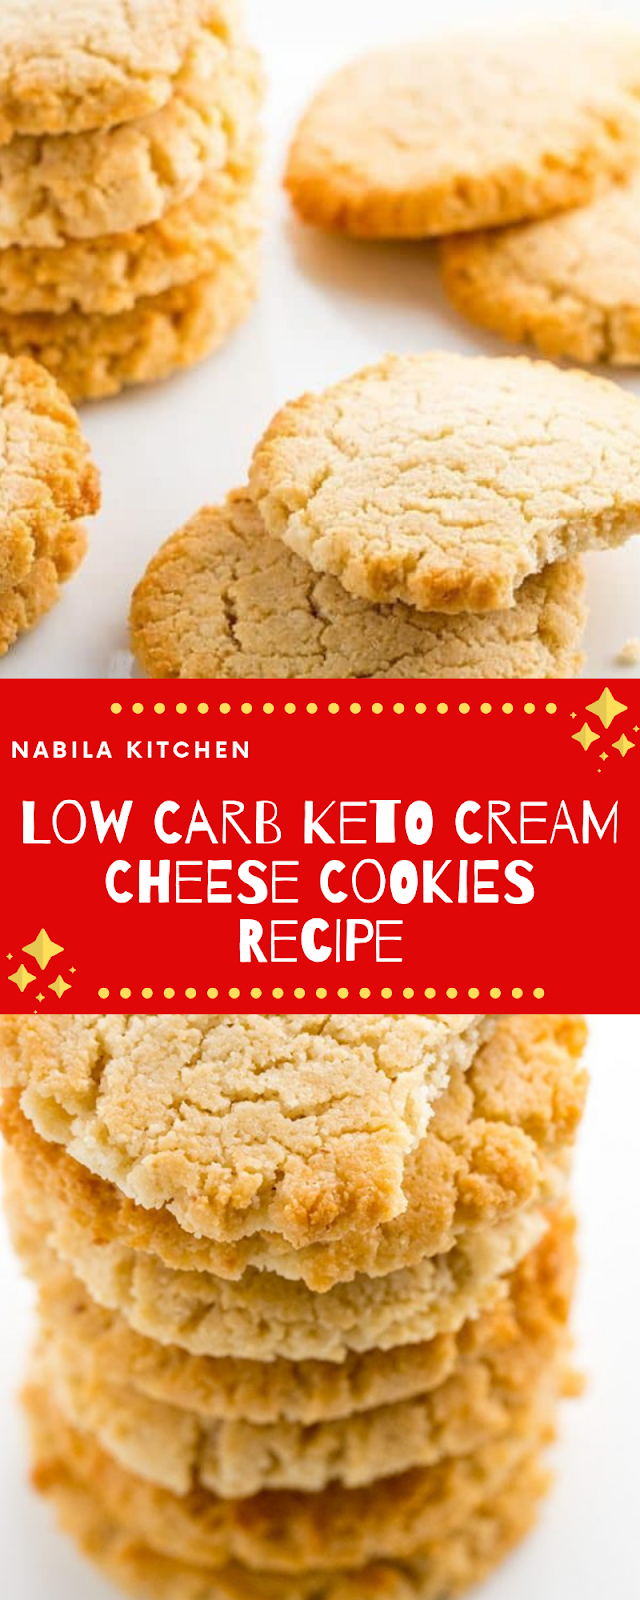 Low Carb Keto Cream Cheese Cookies Recipe 